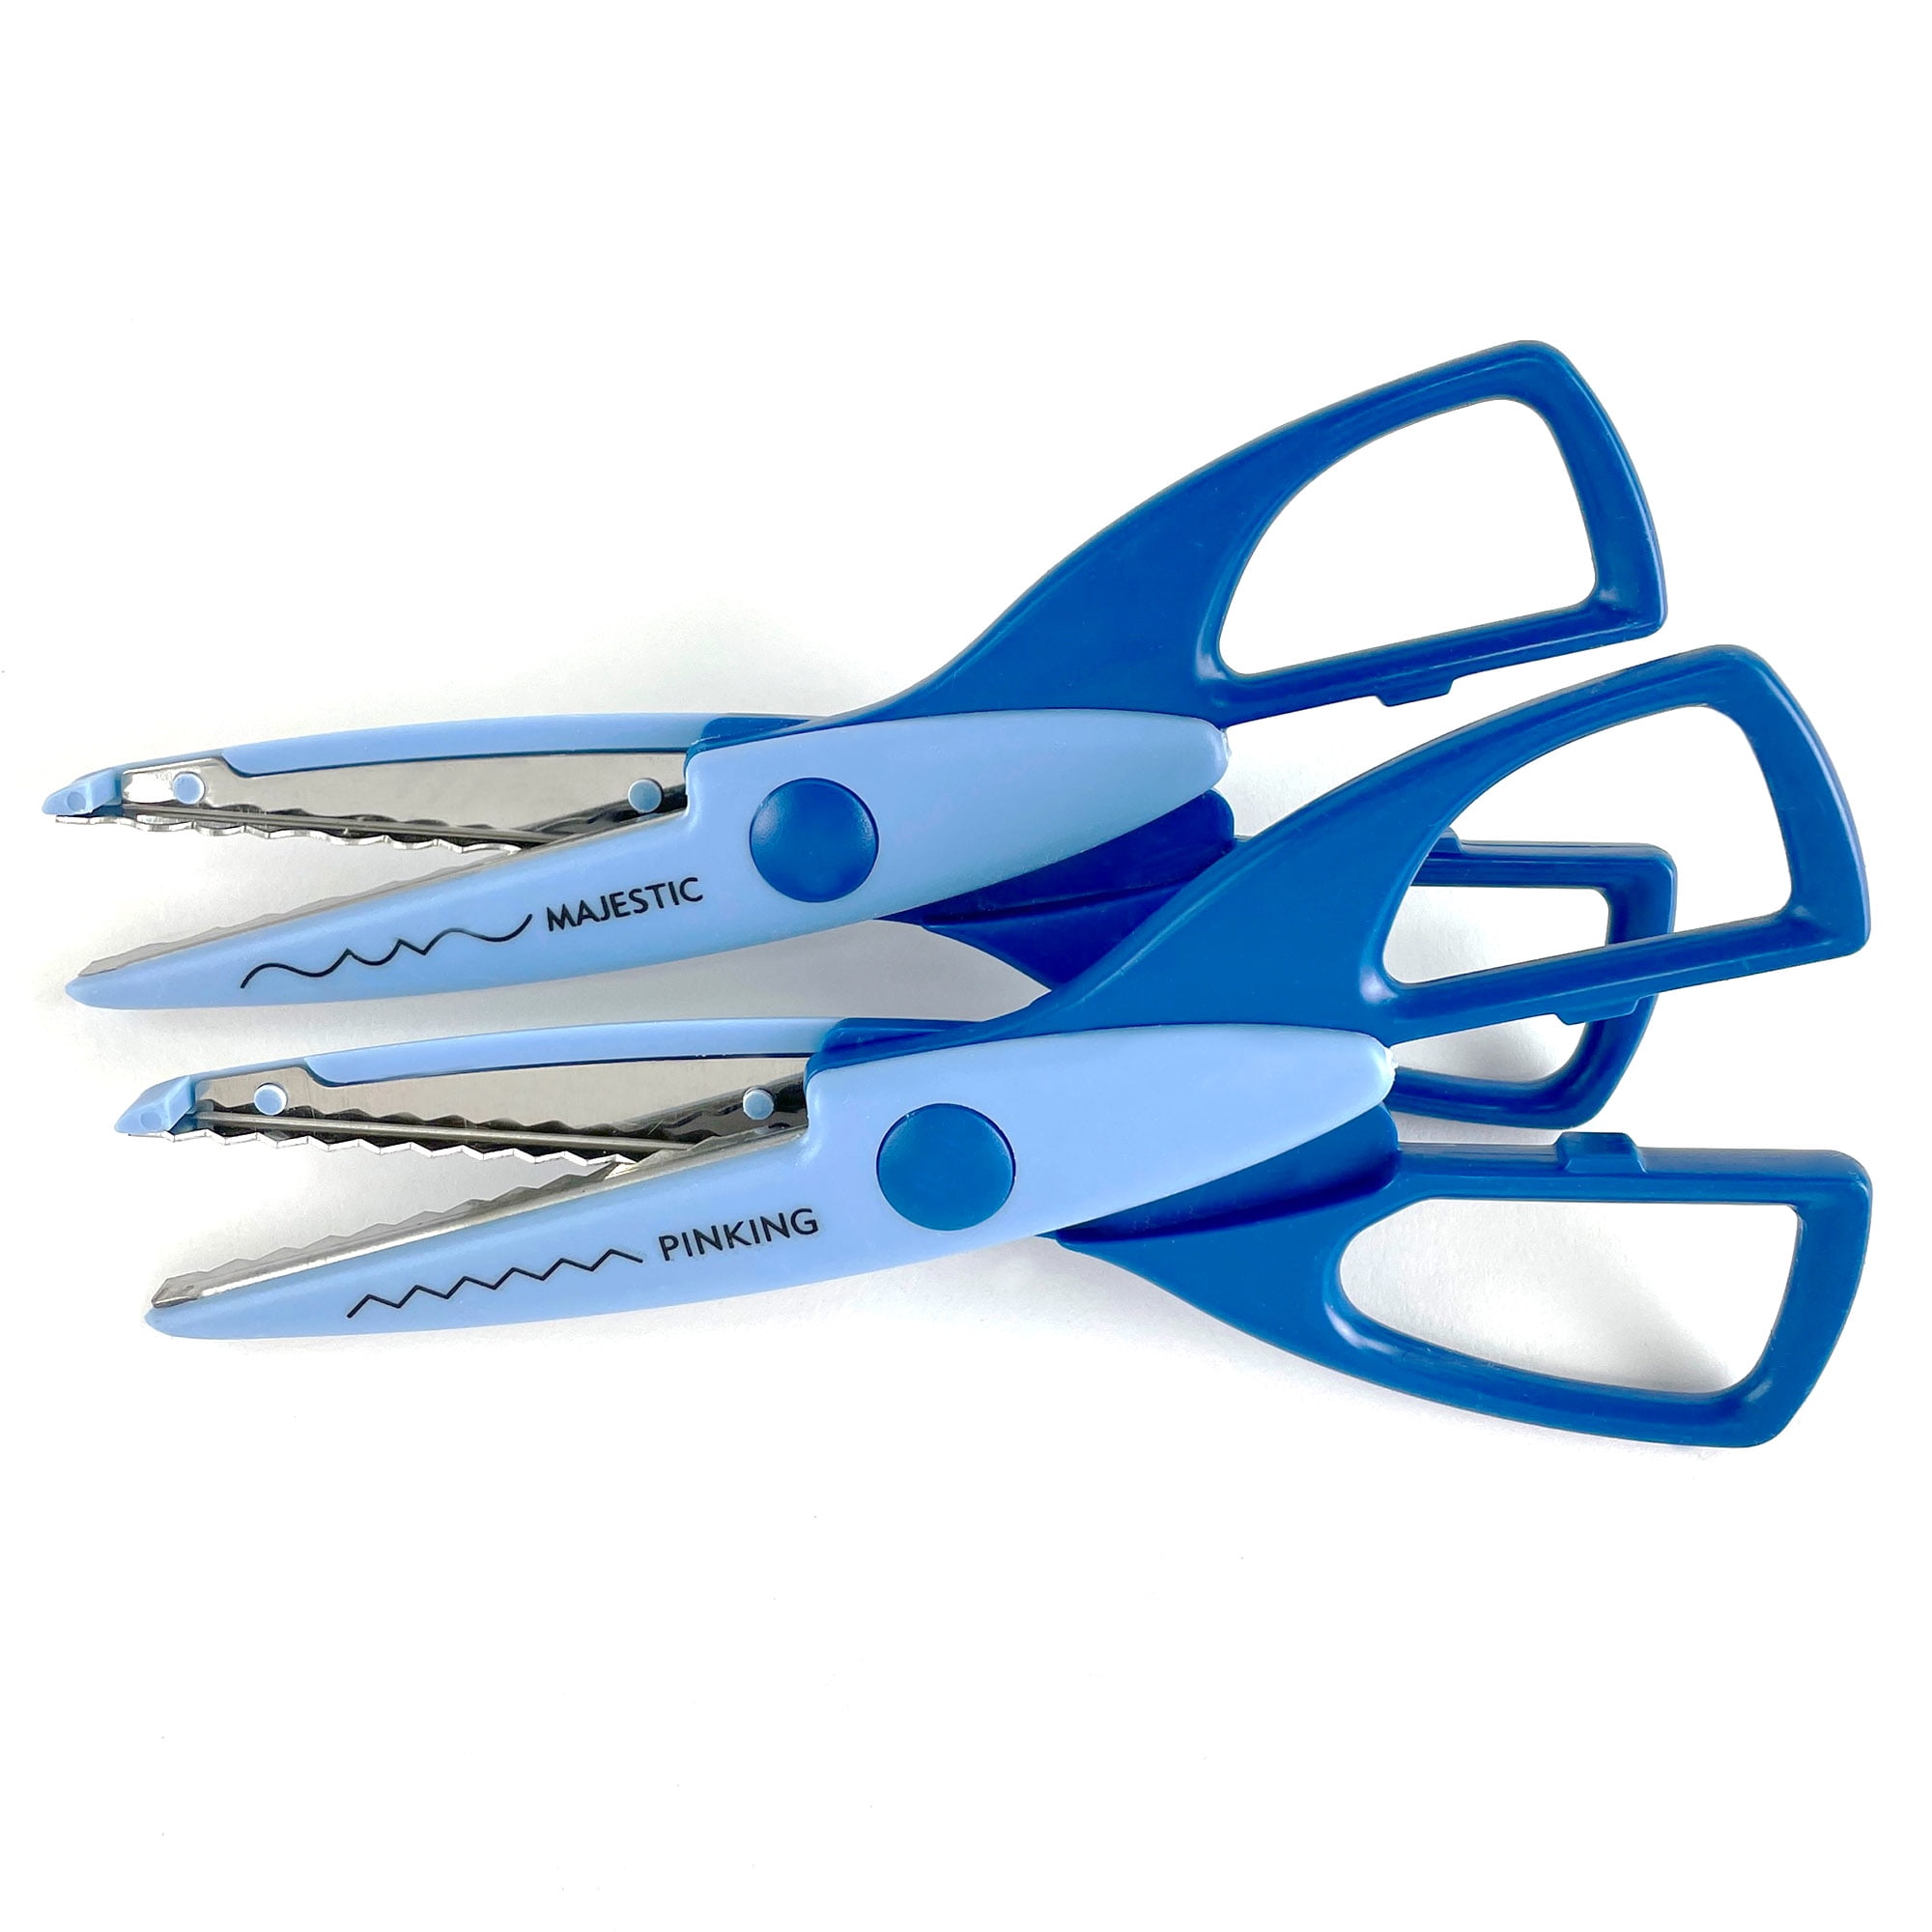 Craftgear iBayam Scissors, Soft Grip Handles Stainless Steel, Blue-Pink SET  of 2